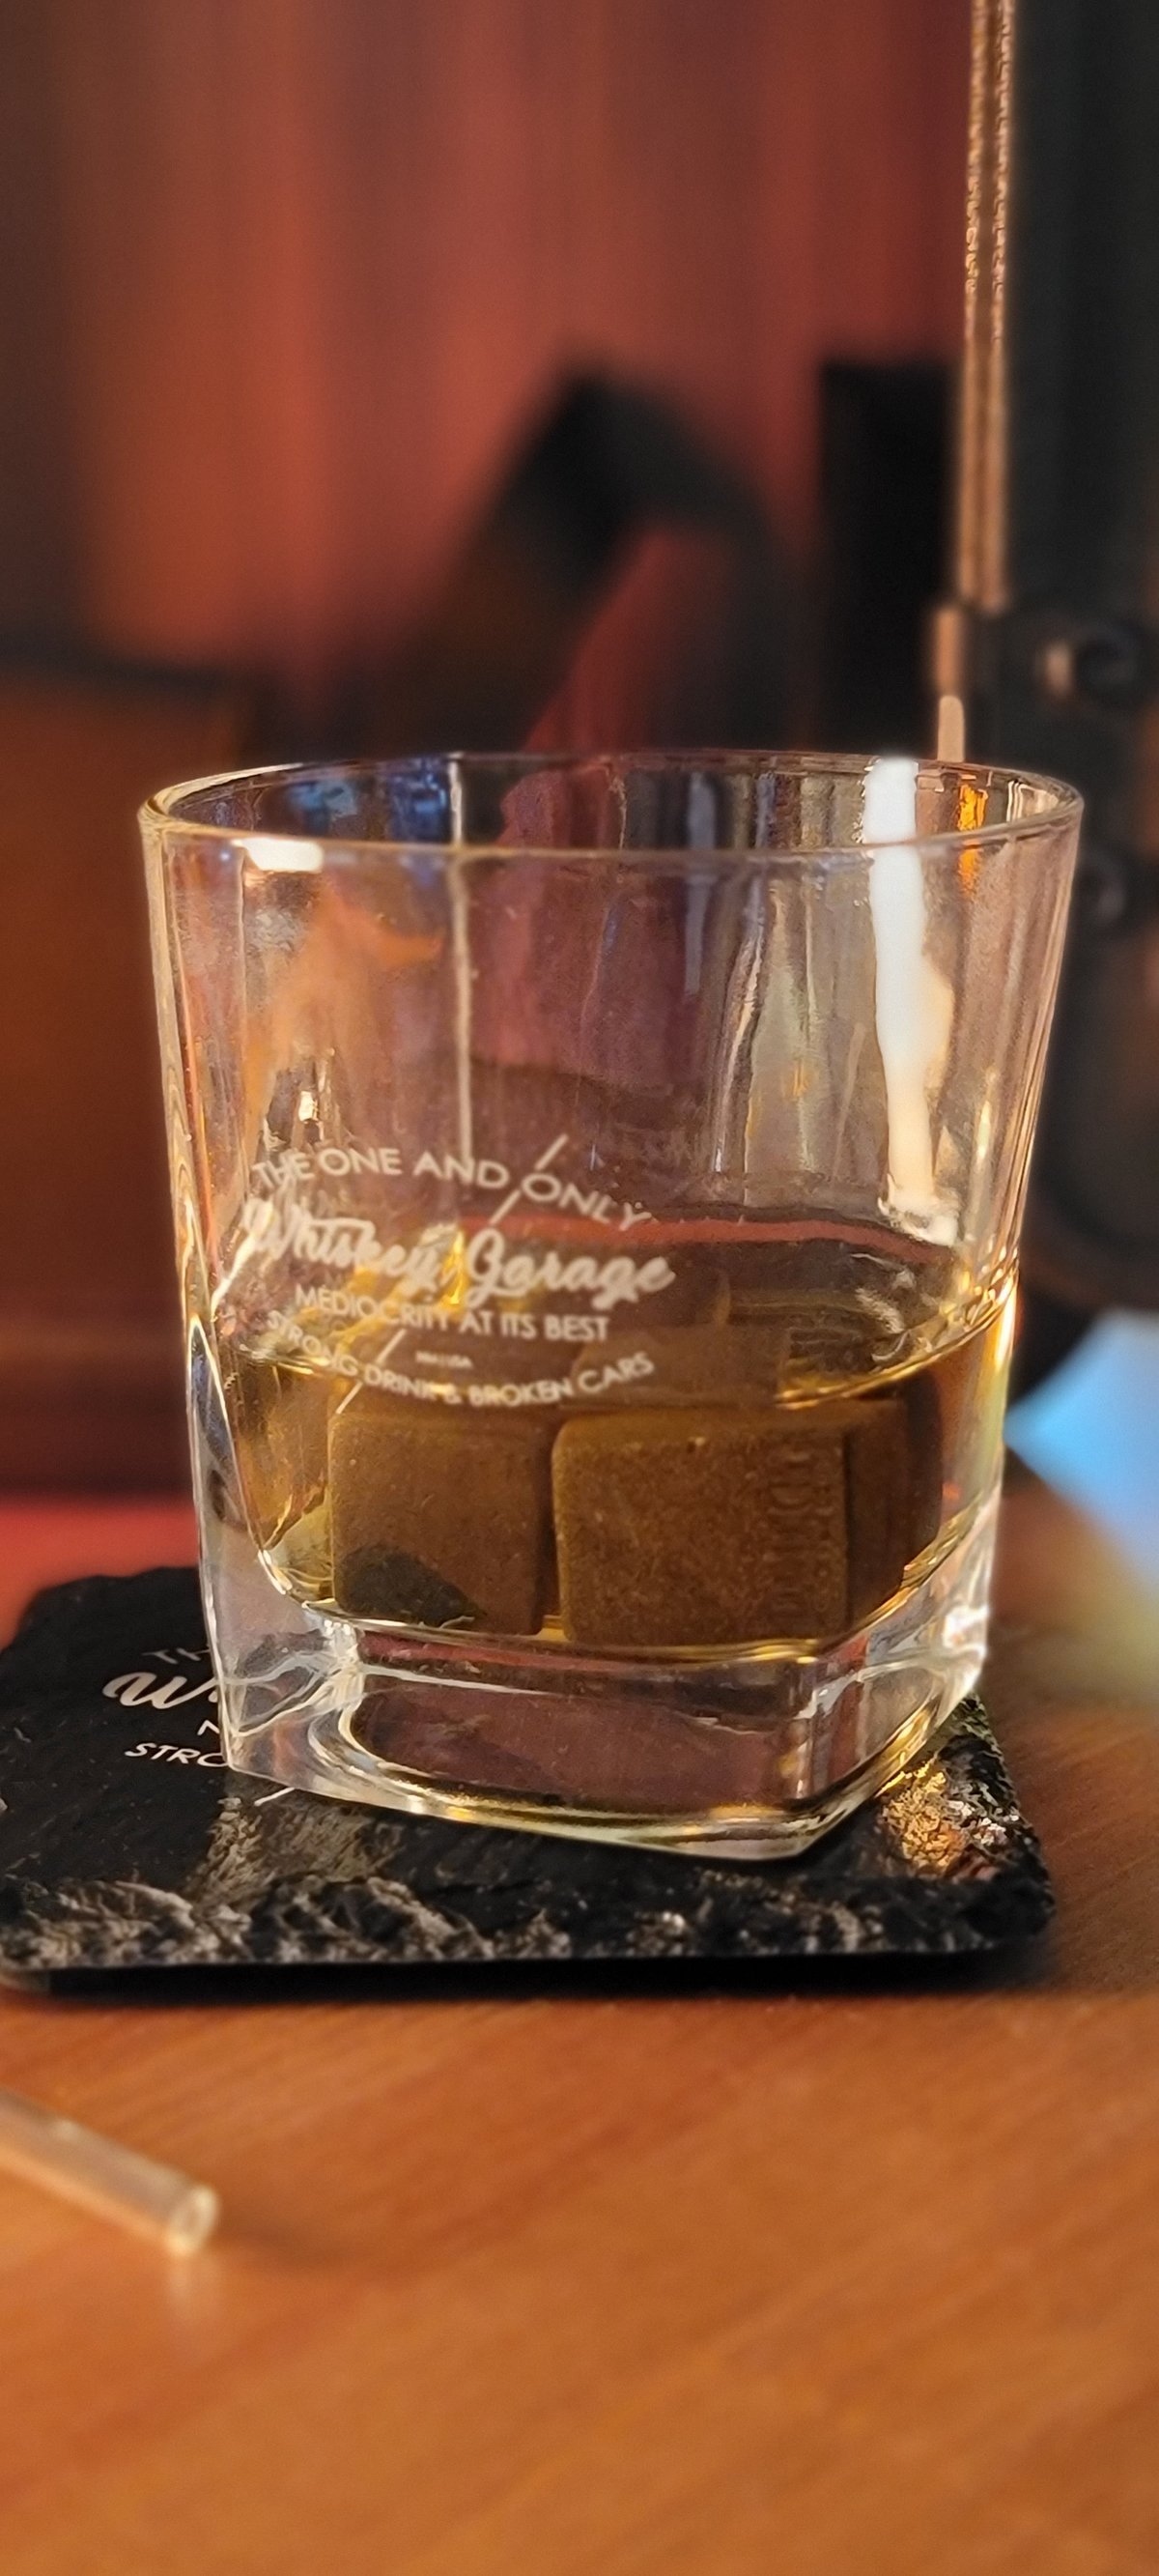 Image of Whiskey garage scotch glass